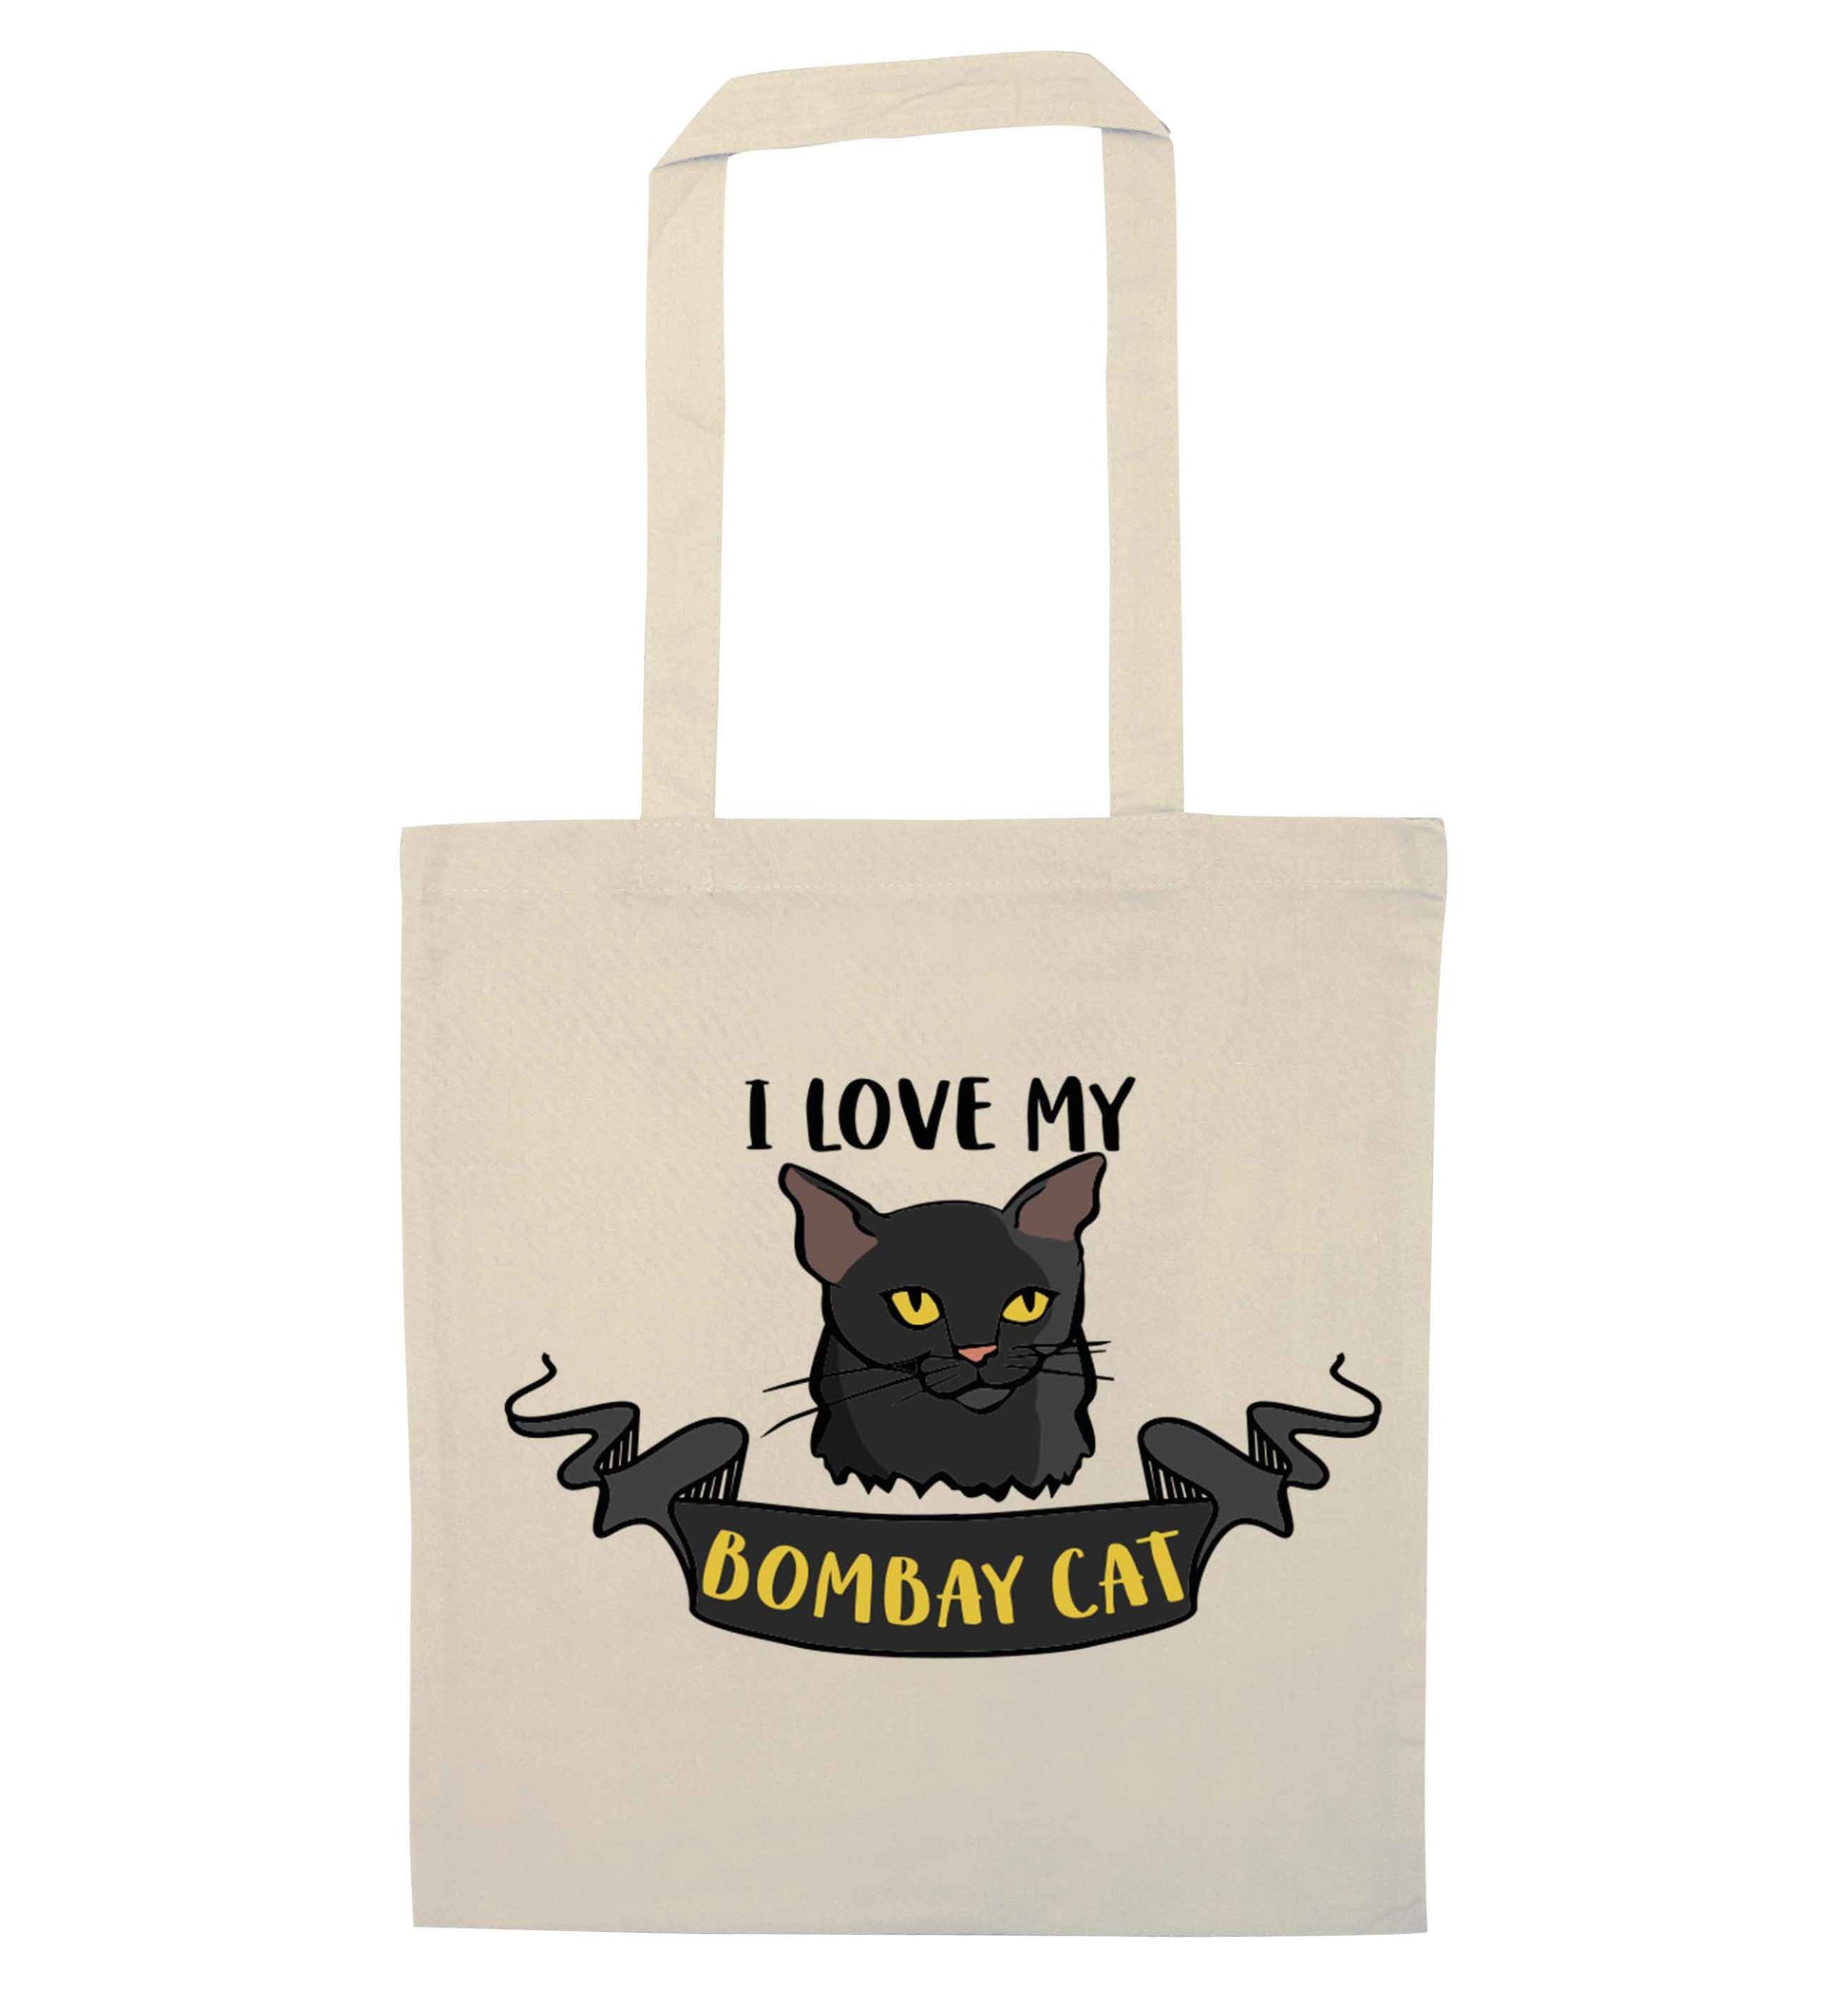 I love my bombay cat natural tote bag